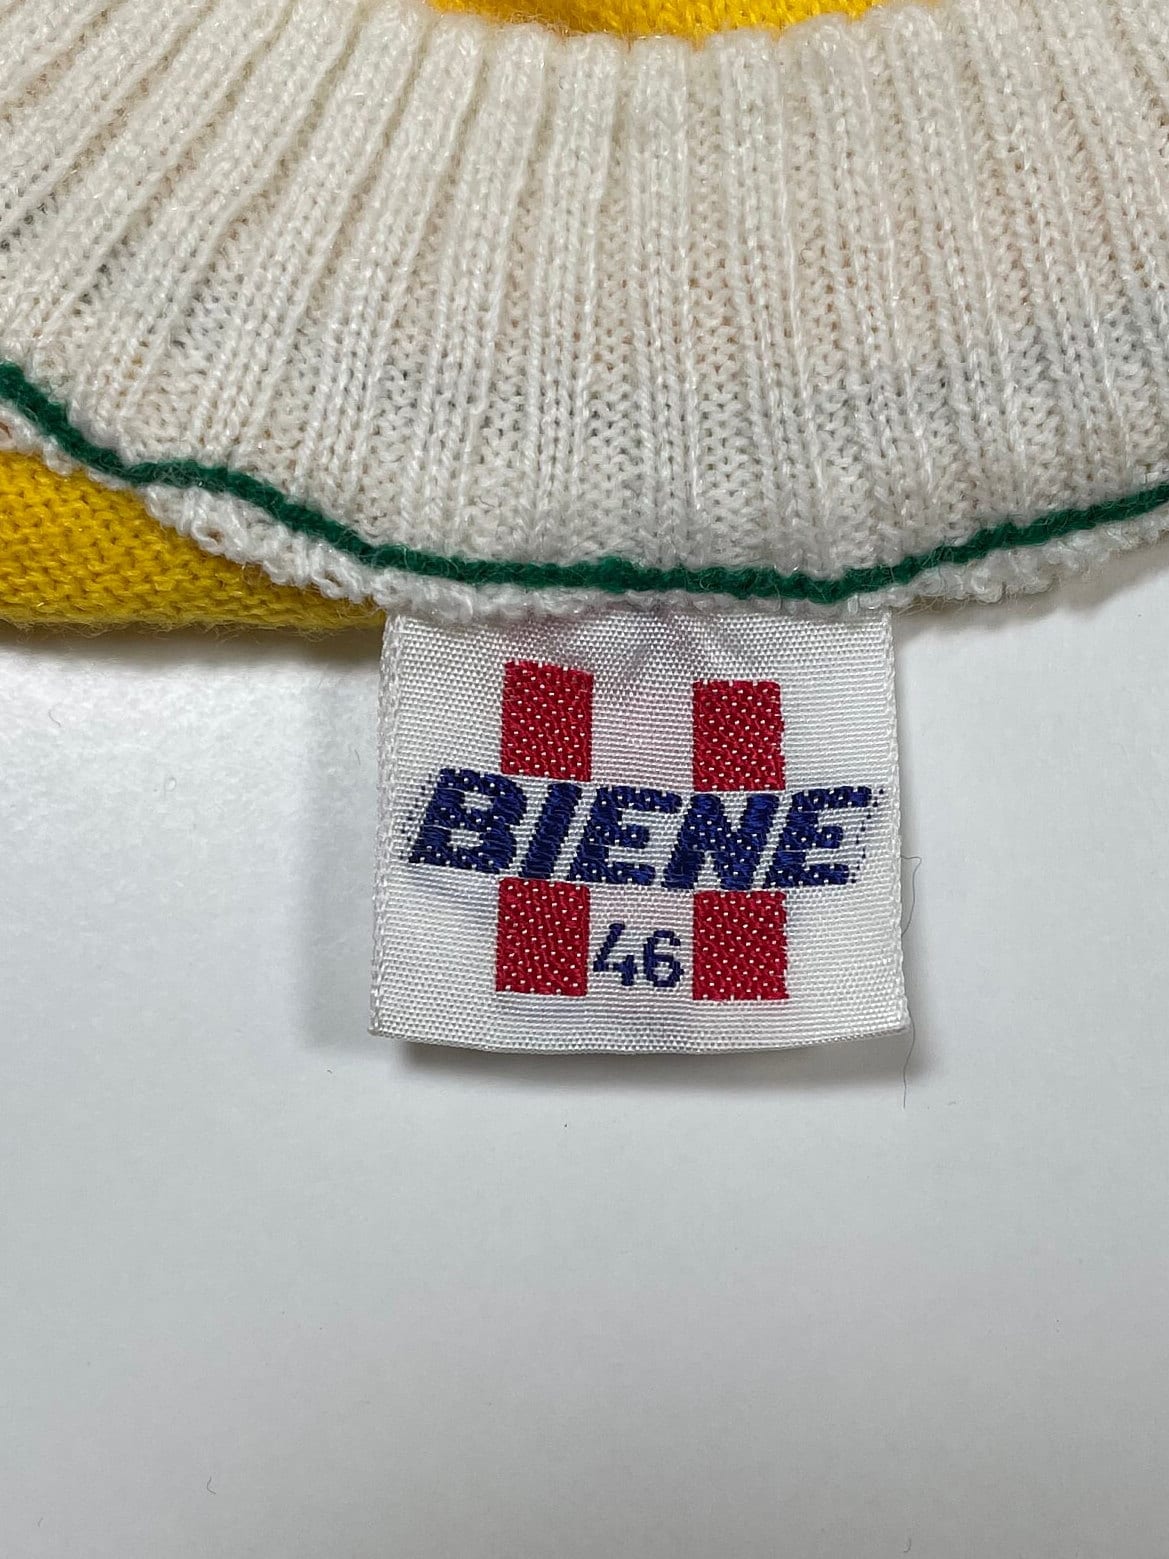 Vintage Brasil Knit Cycling Jersey - Small to Medium 